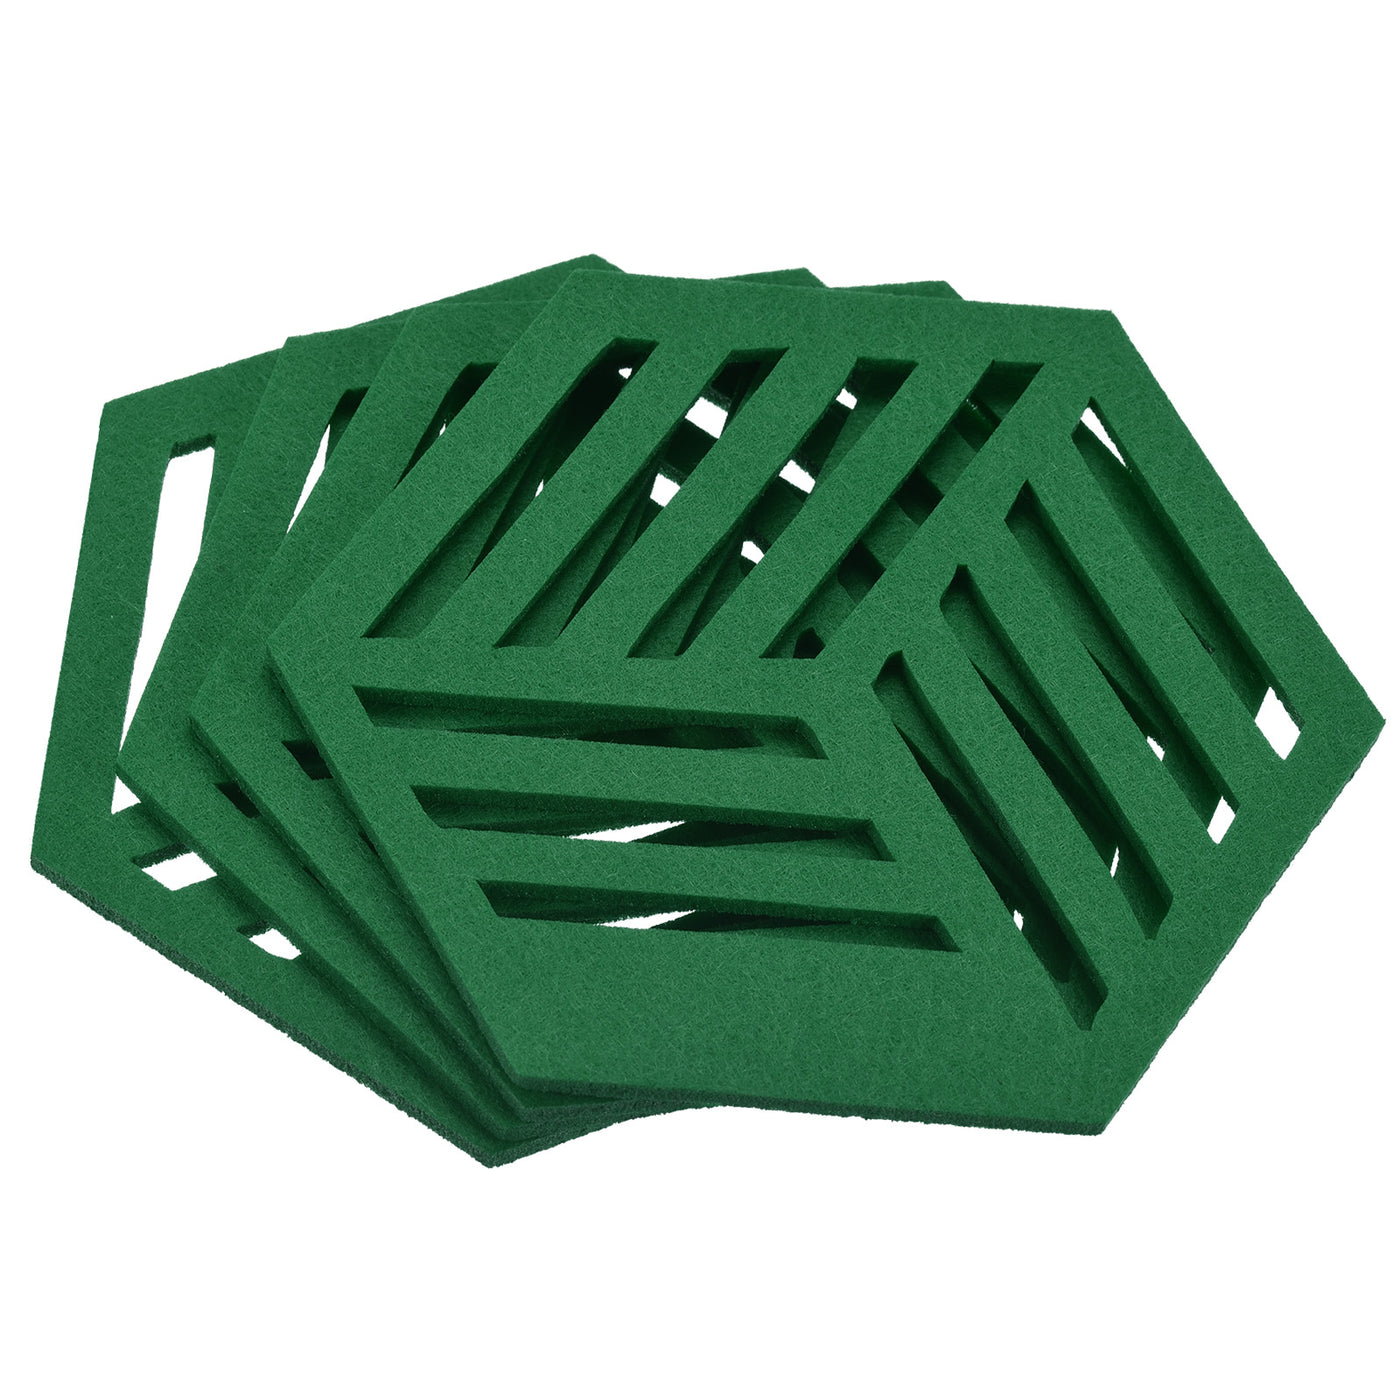 uxcell Uxcell Felt Coasters, 4pcs Hexagon Mat Pad Coaster for Drink Cup Pot Bowl Vase, Green